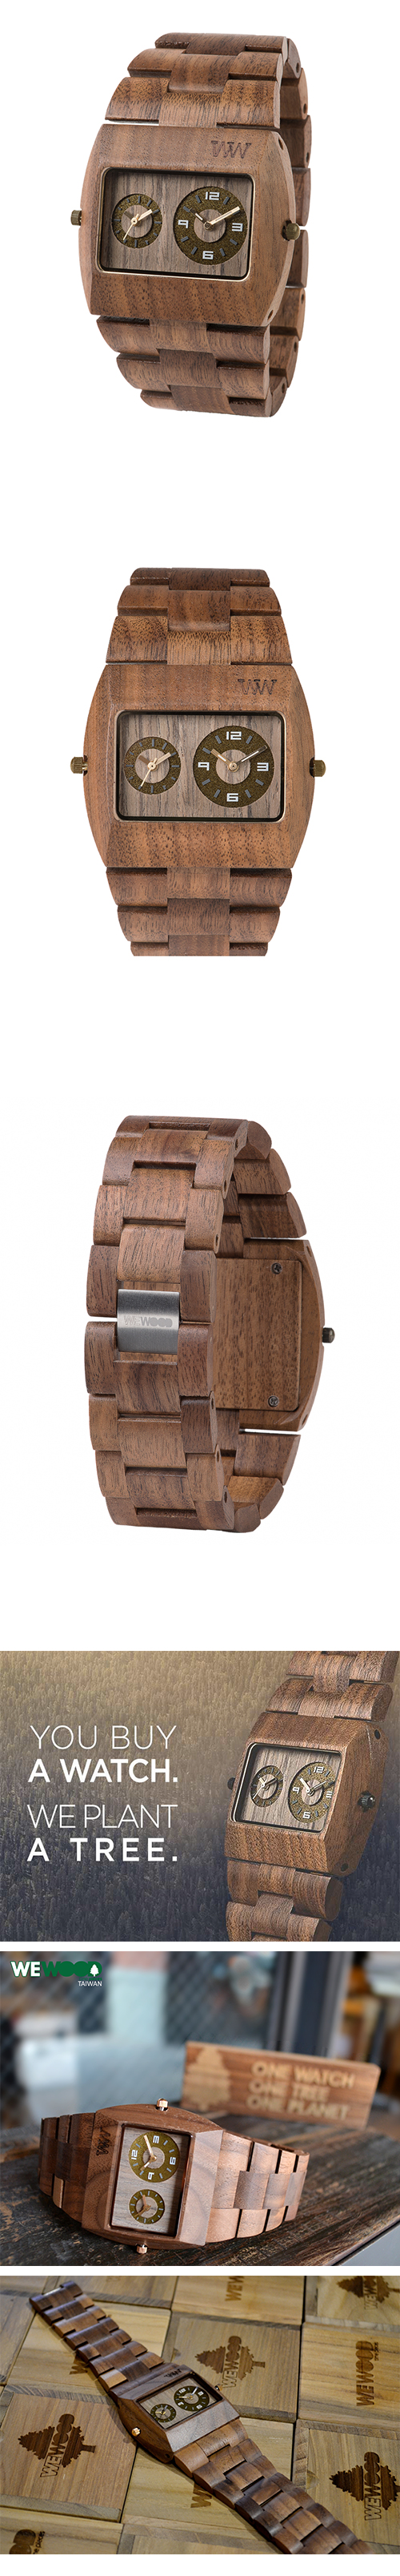 WEWOOD 義大利時尚木頭腕錶 方形錶款 Jupiter Nut